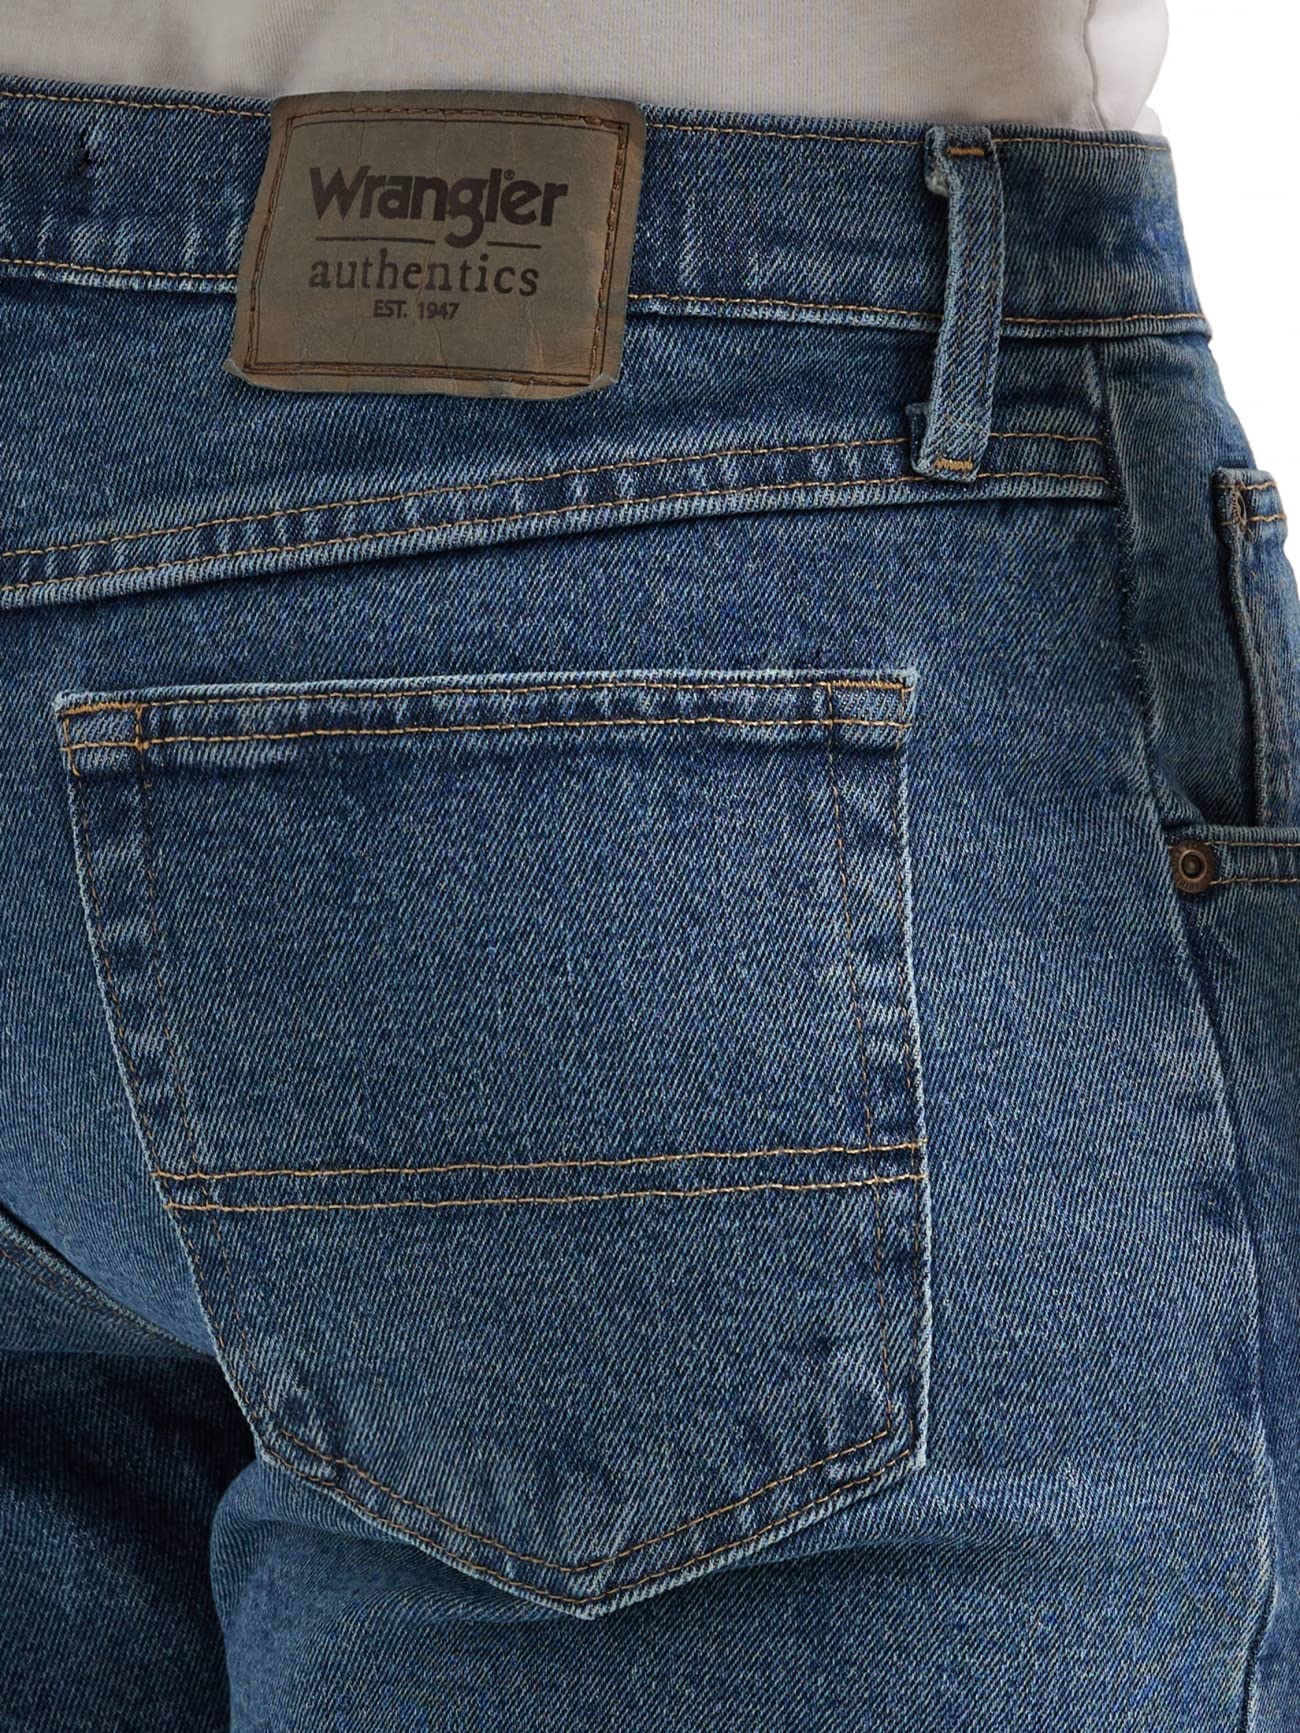 Wrangler Authentics Men's Classic 5-Pocket Relaxed Fit Jean, Dark Stonewash Flex, 38W x 34L